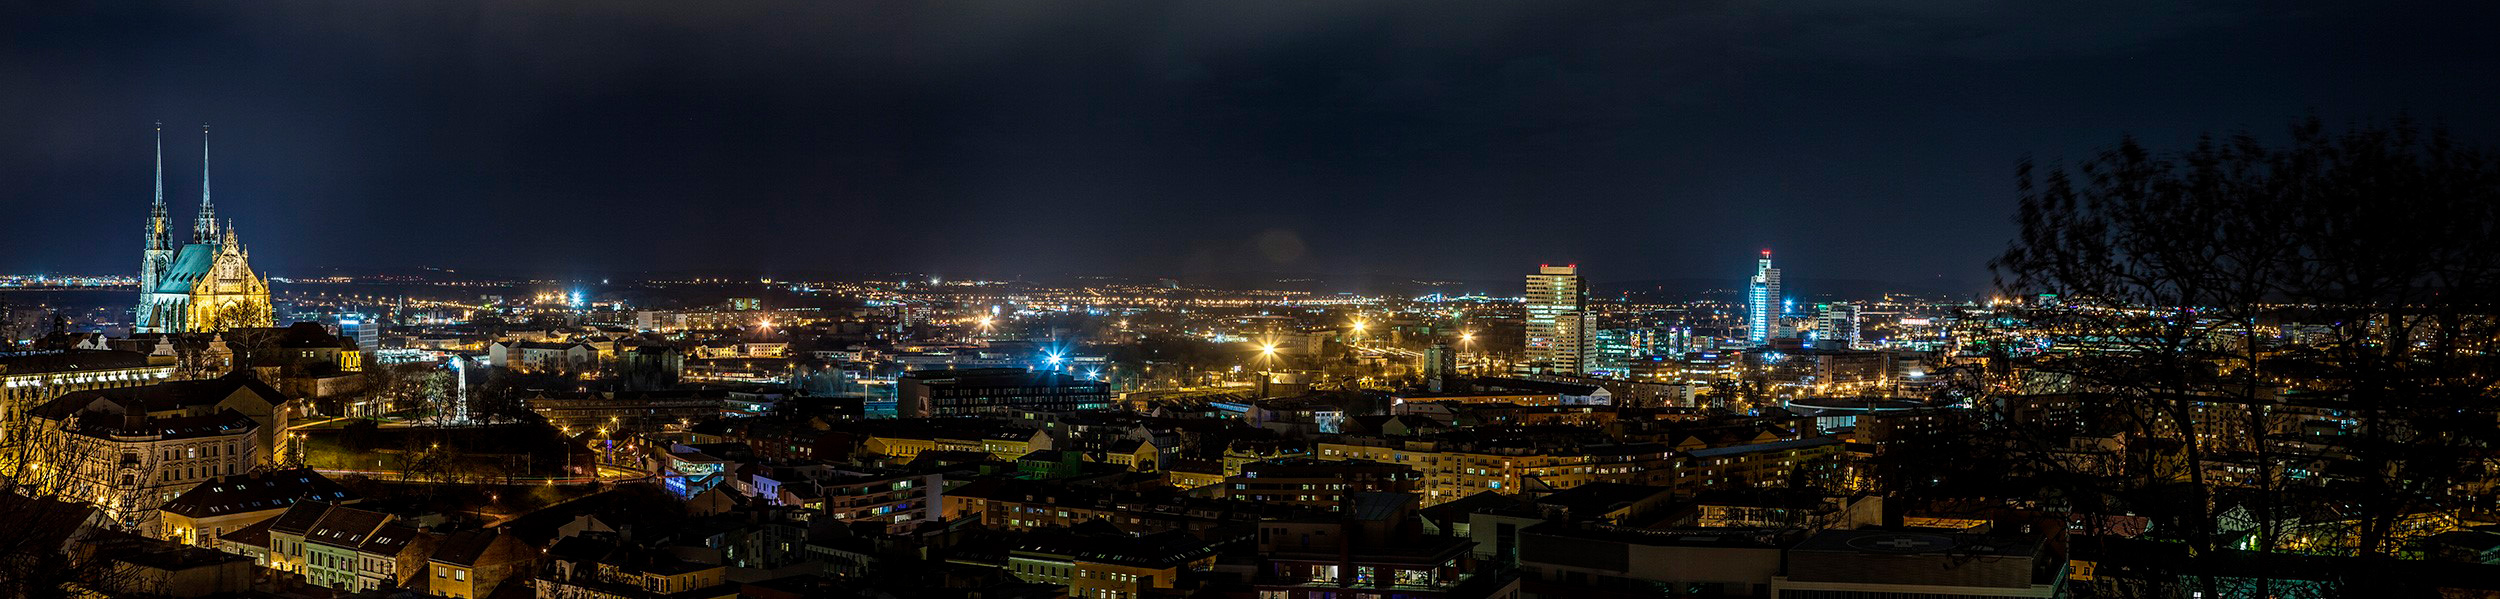 Panoramatická noční fotografie Brna, Canon EOS 5D obj.70-200mm f 2,8          